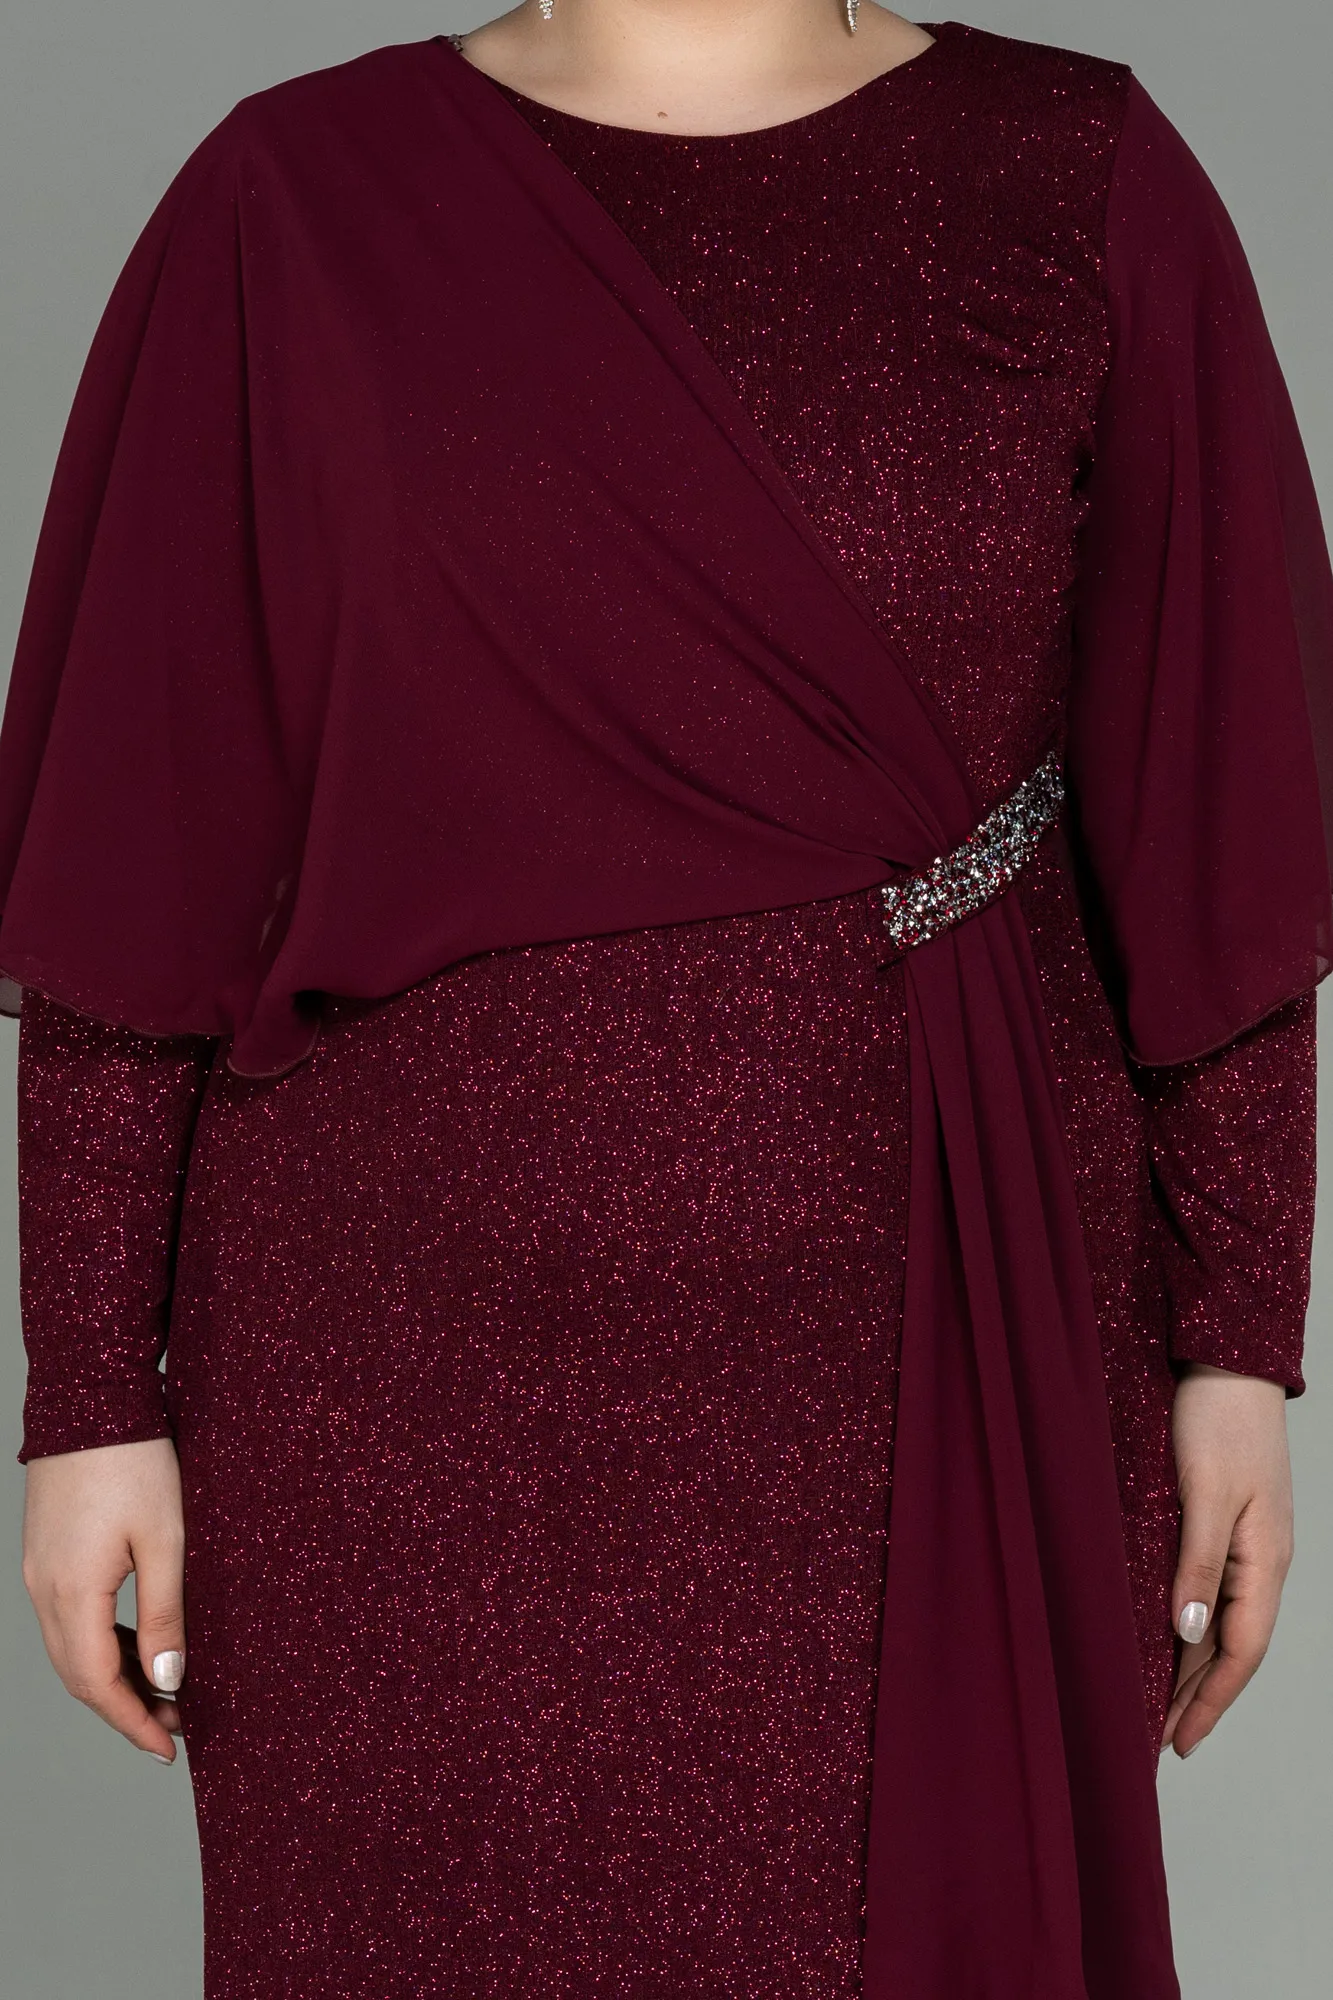 Burgundy-Long Plus Size Evening Dress ABU3013